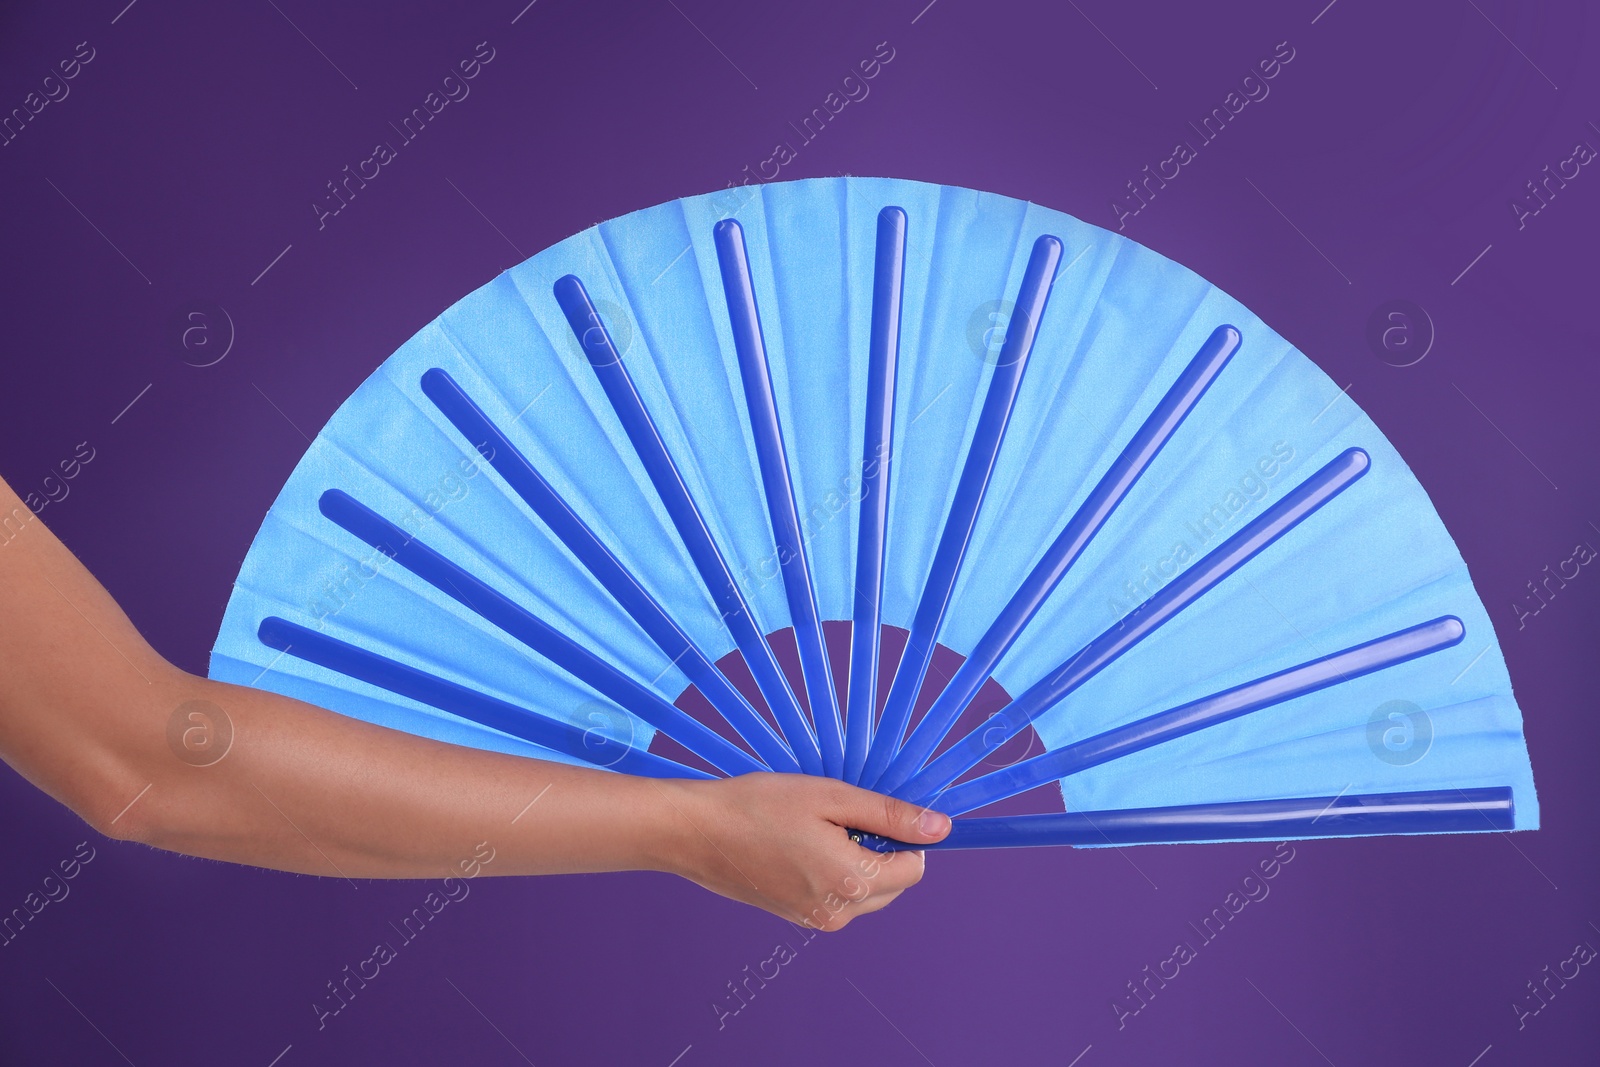 Photo of Woman holding blue hand fan on purple background, closeup